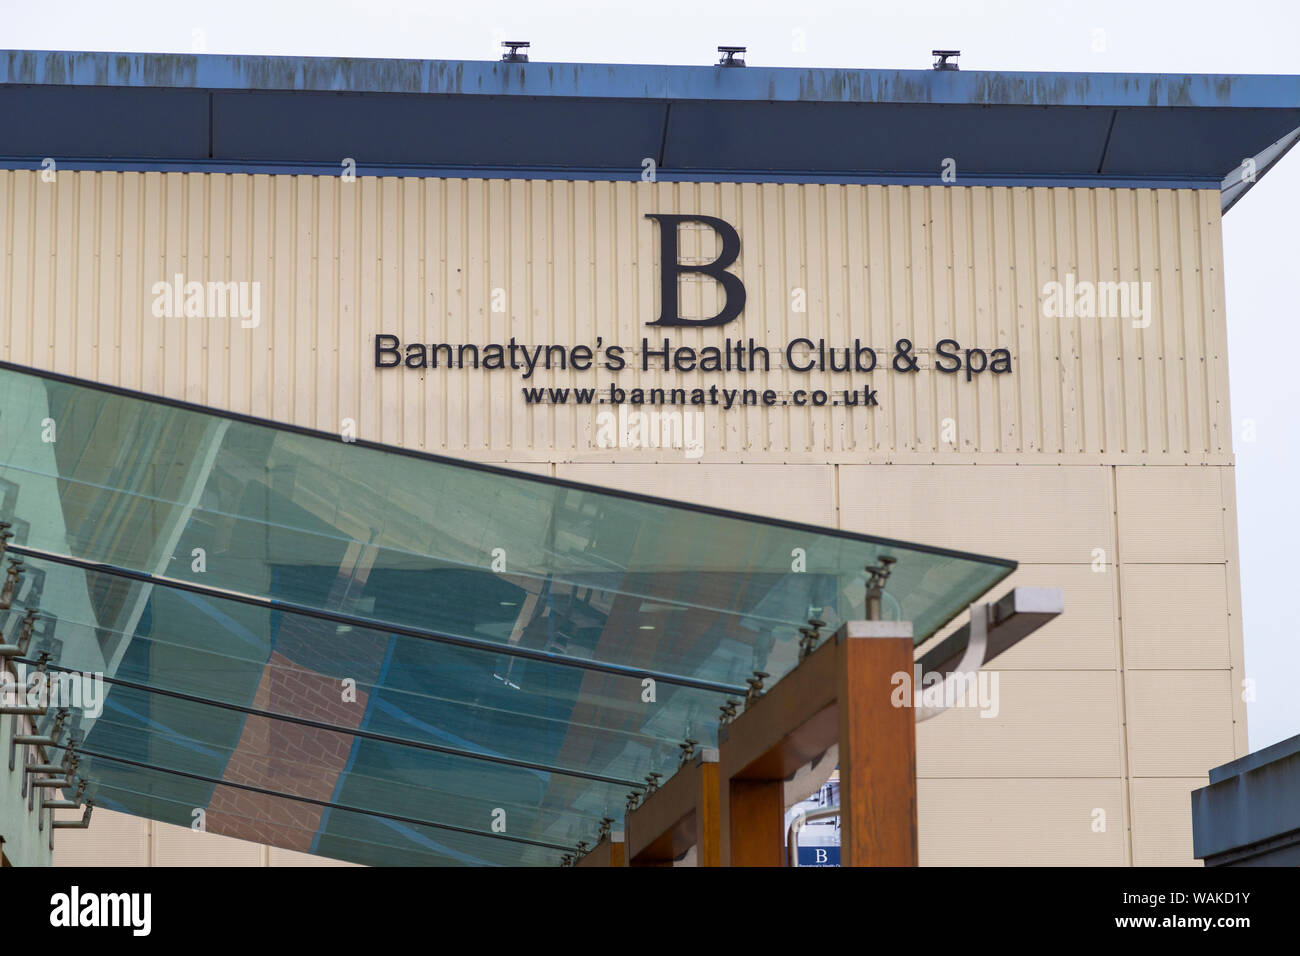 Bannatynes health club & spa, ashford, kent, uk Stock Photo